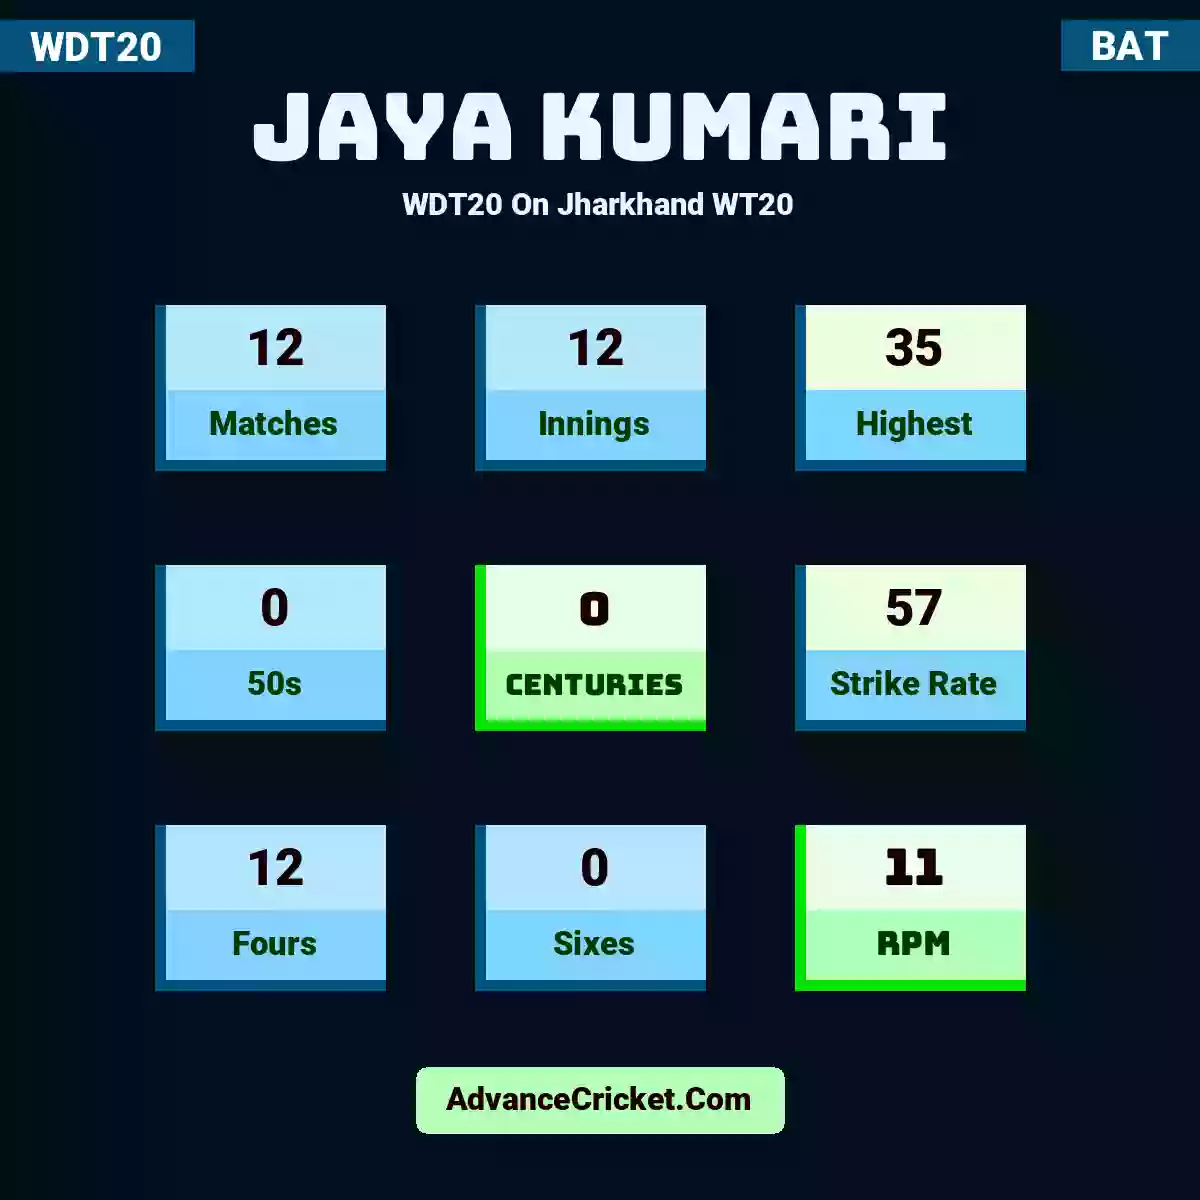 Jaya Kumari WDT20  On Jharkhand WT20, Jaya Kumari played 12 matches, scored 35 runs as highest, 0 half-centuries, and 0 centuries, with a strike rate of 57. J.Kumari hit 12 fours and 0 sixes, with an RPM of 11.